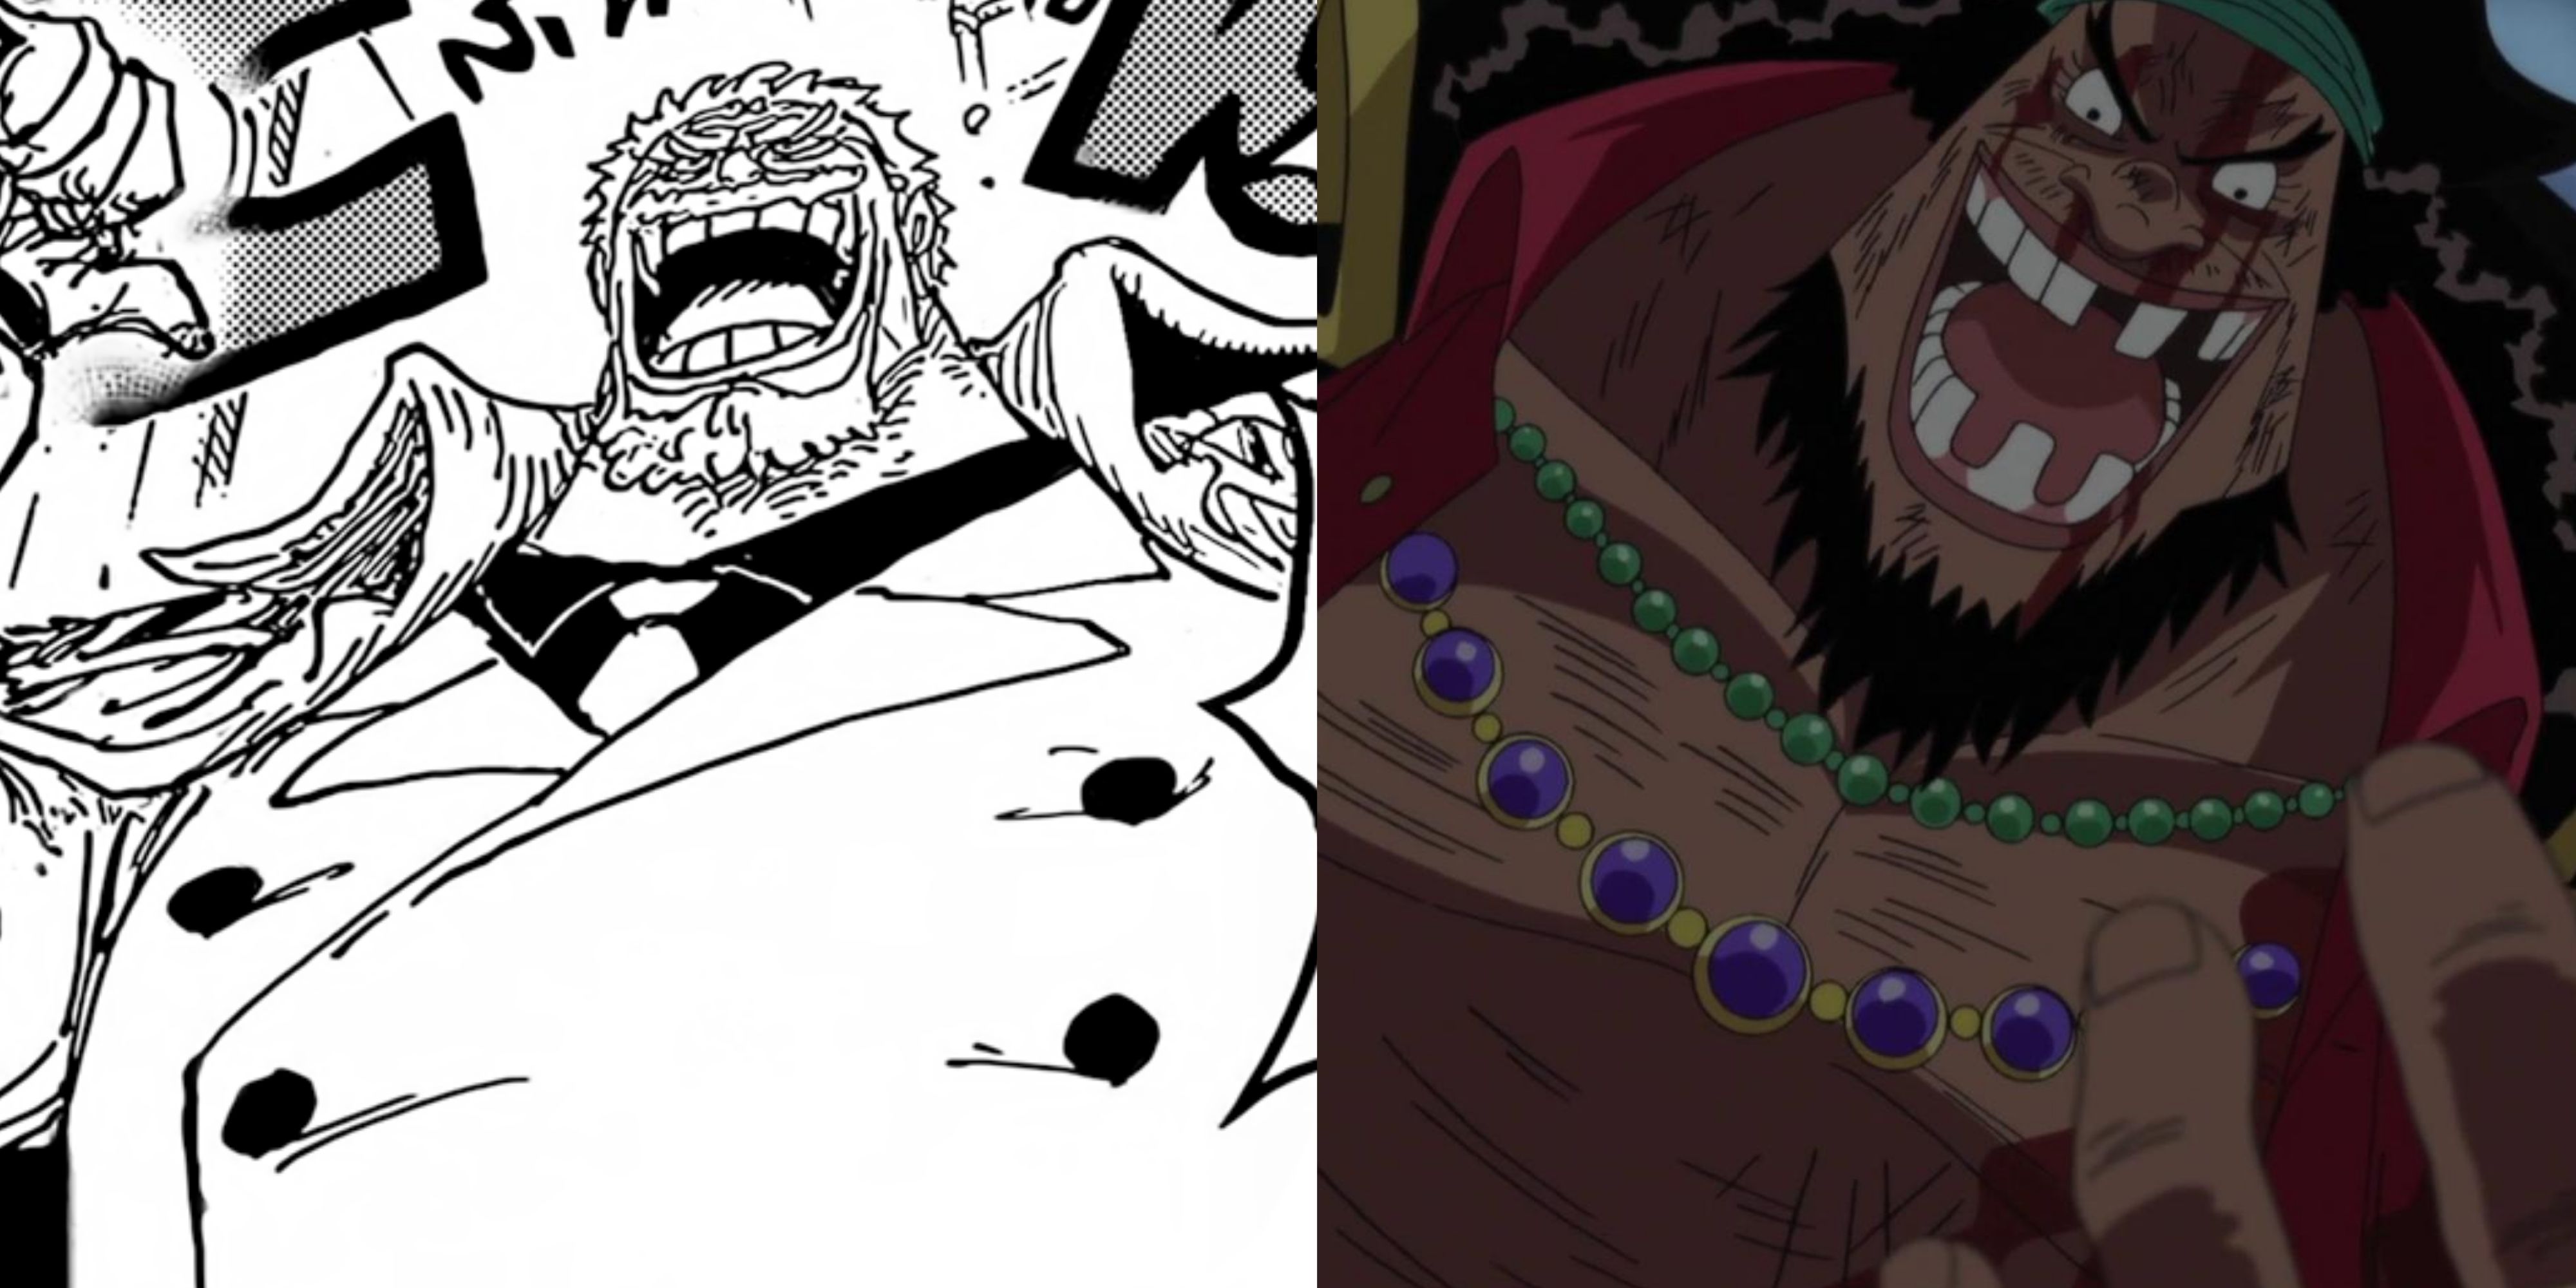 Featured One Piece Garp vs Blackbeard